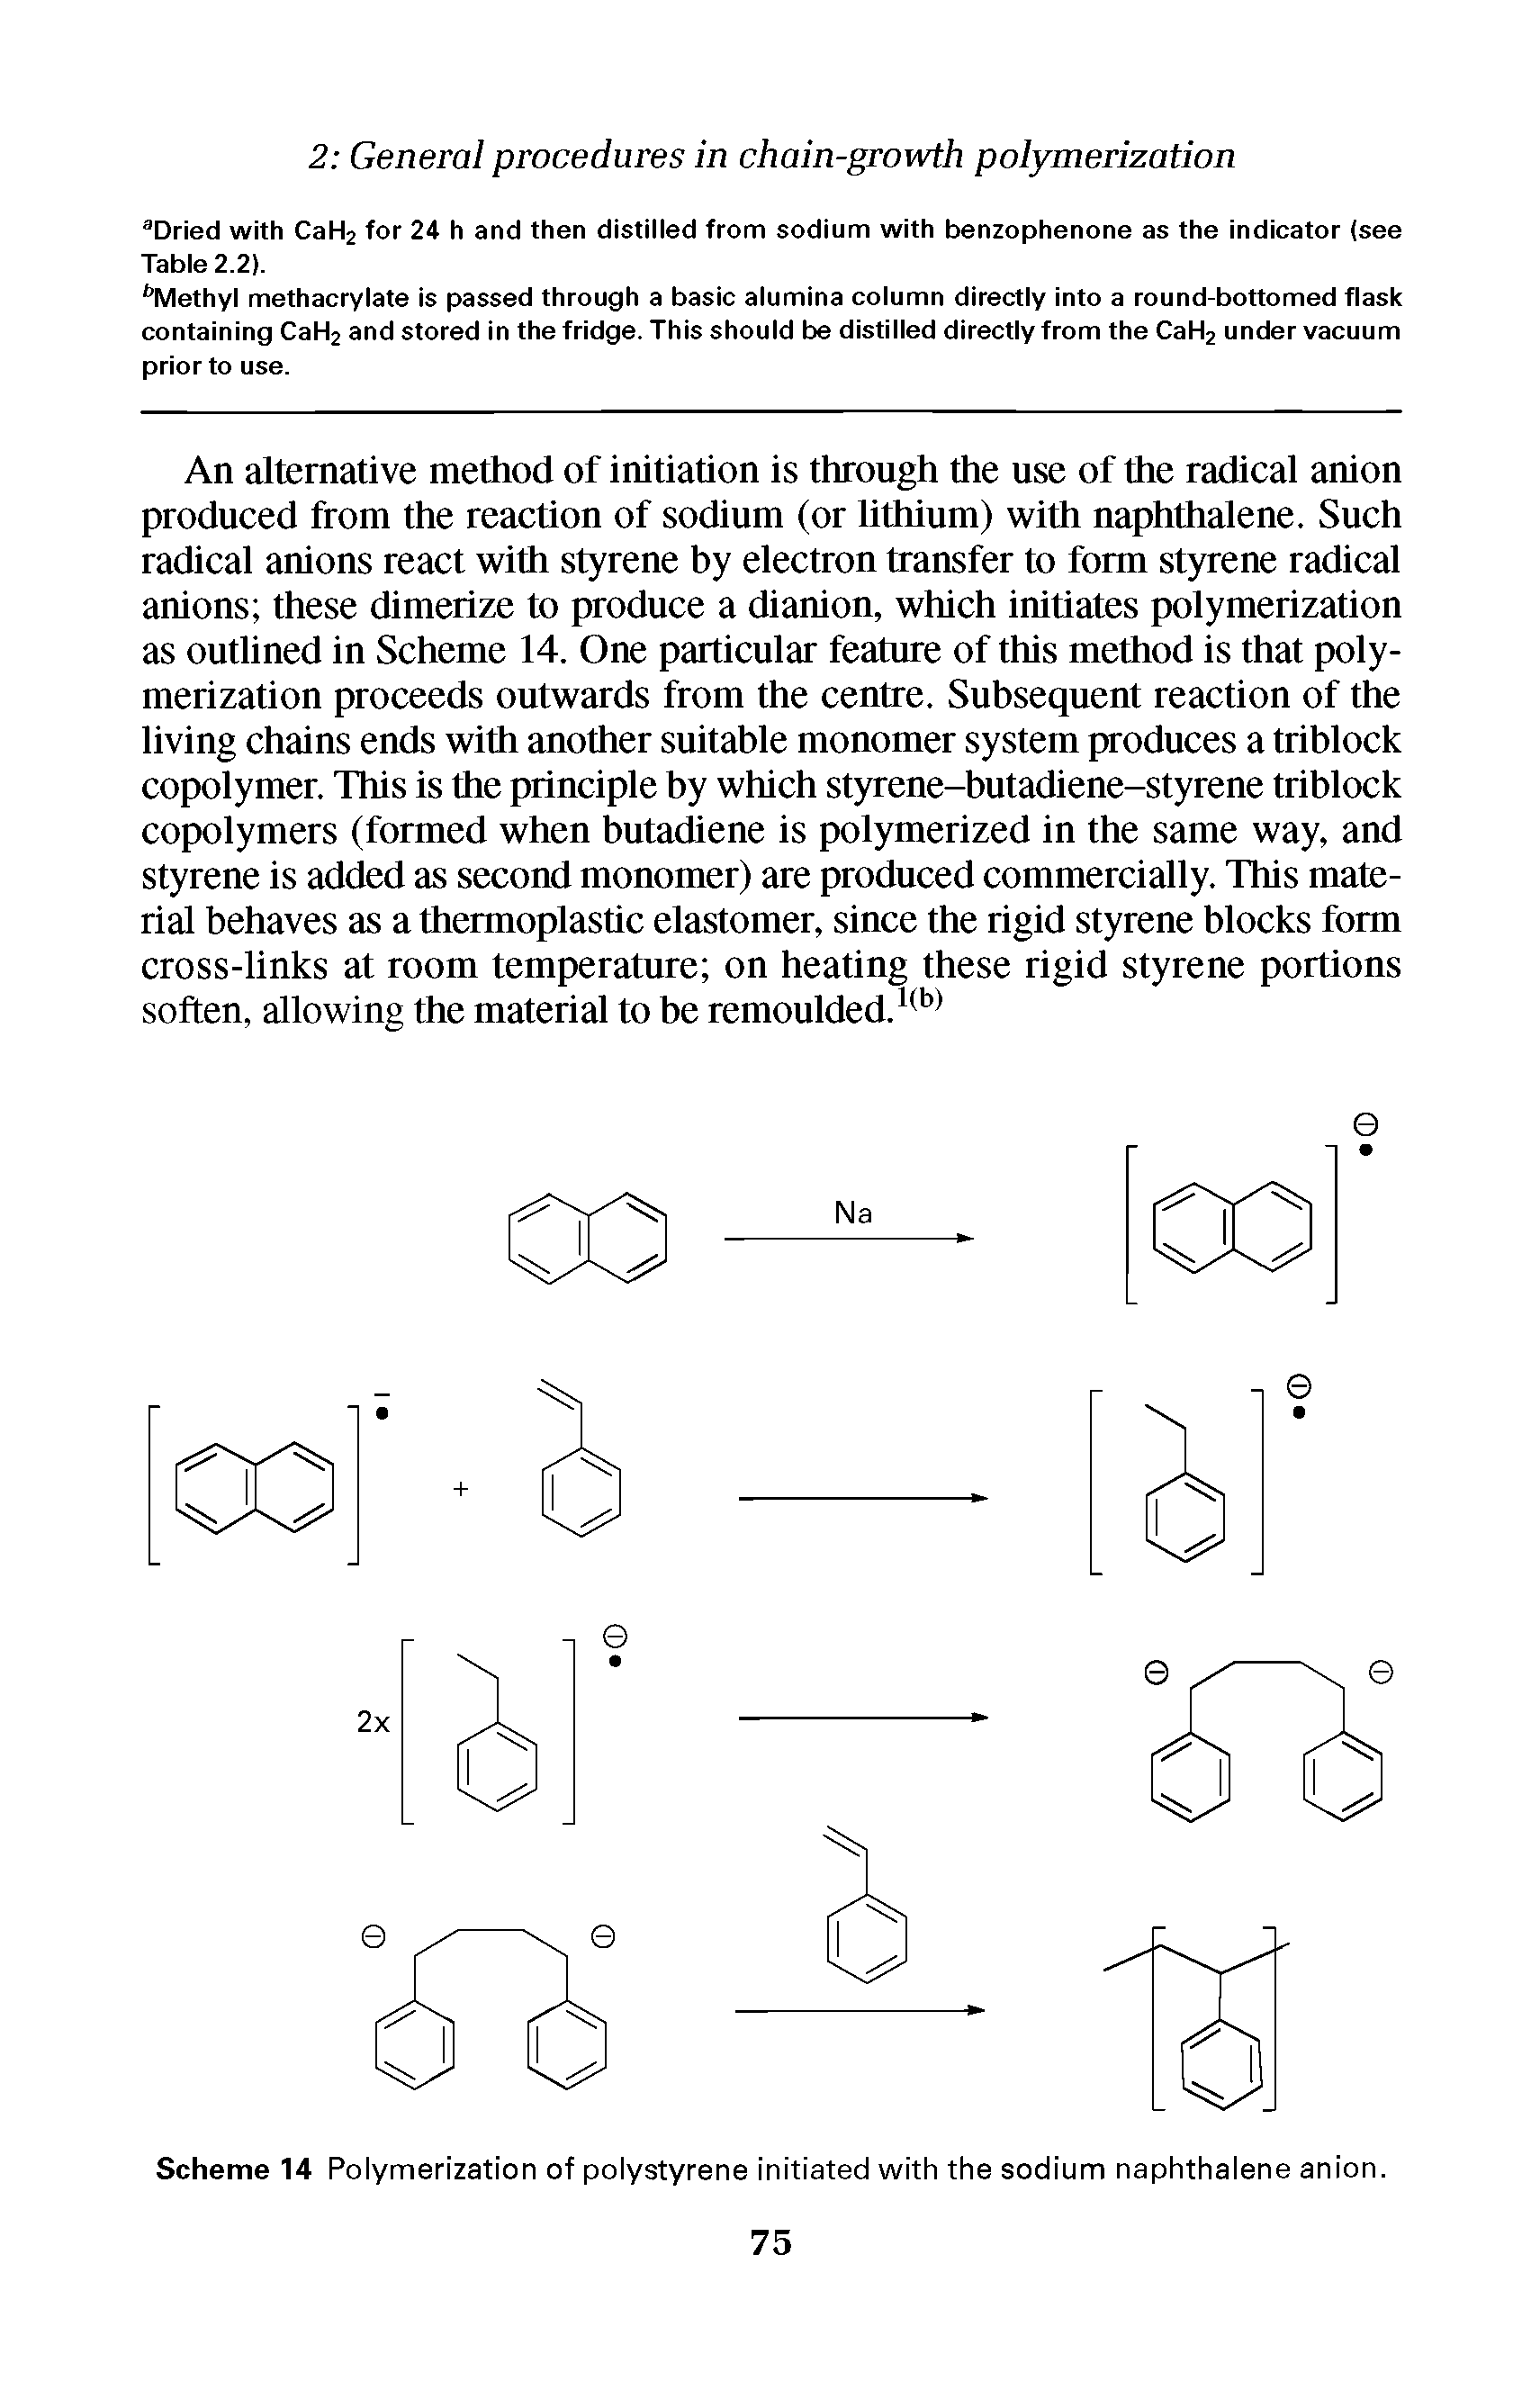 Scheme 14 Polymerization of polystyrene initiated with the sodium naphthalene anion.